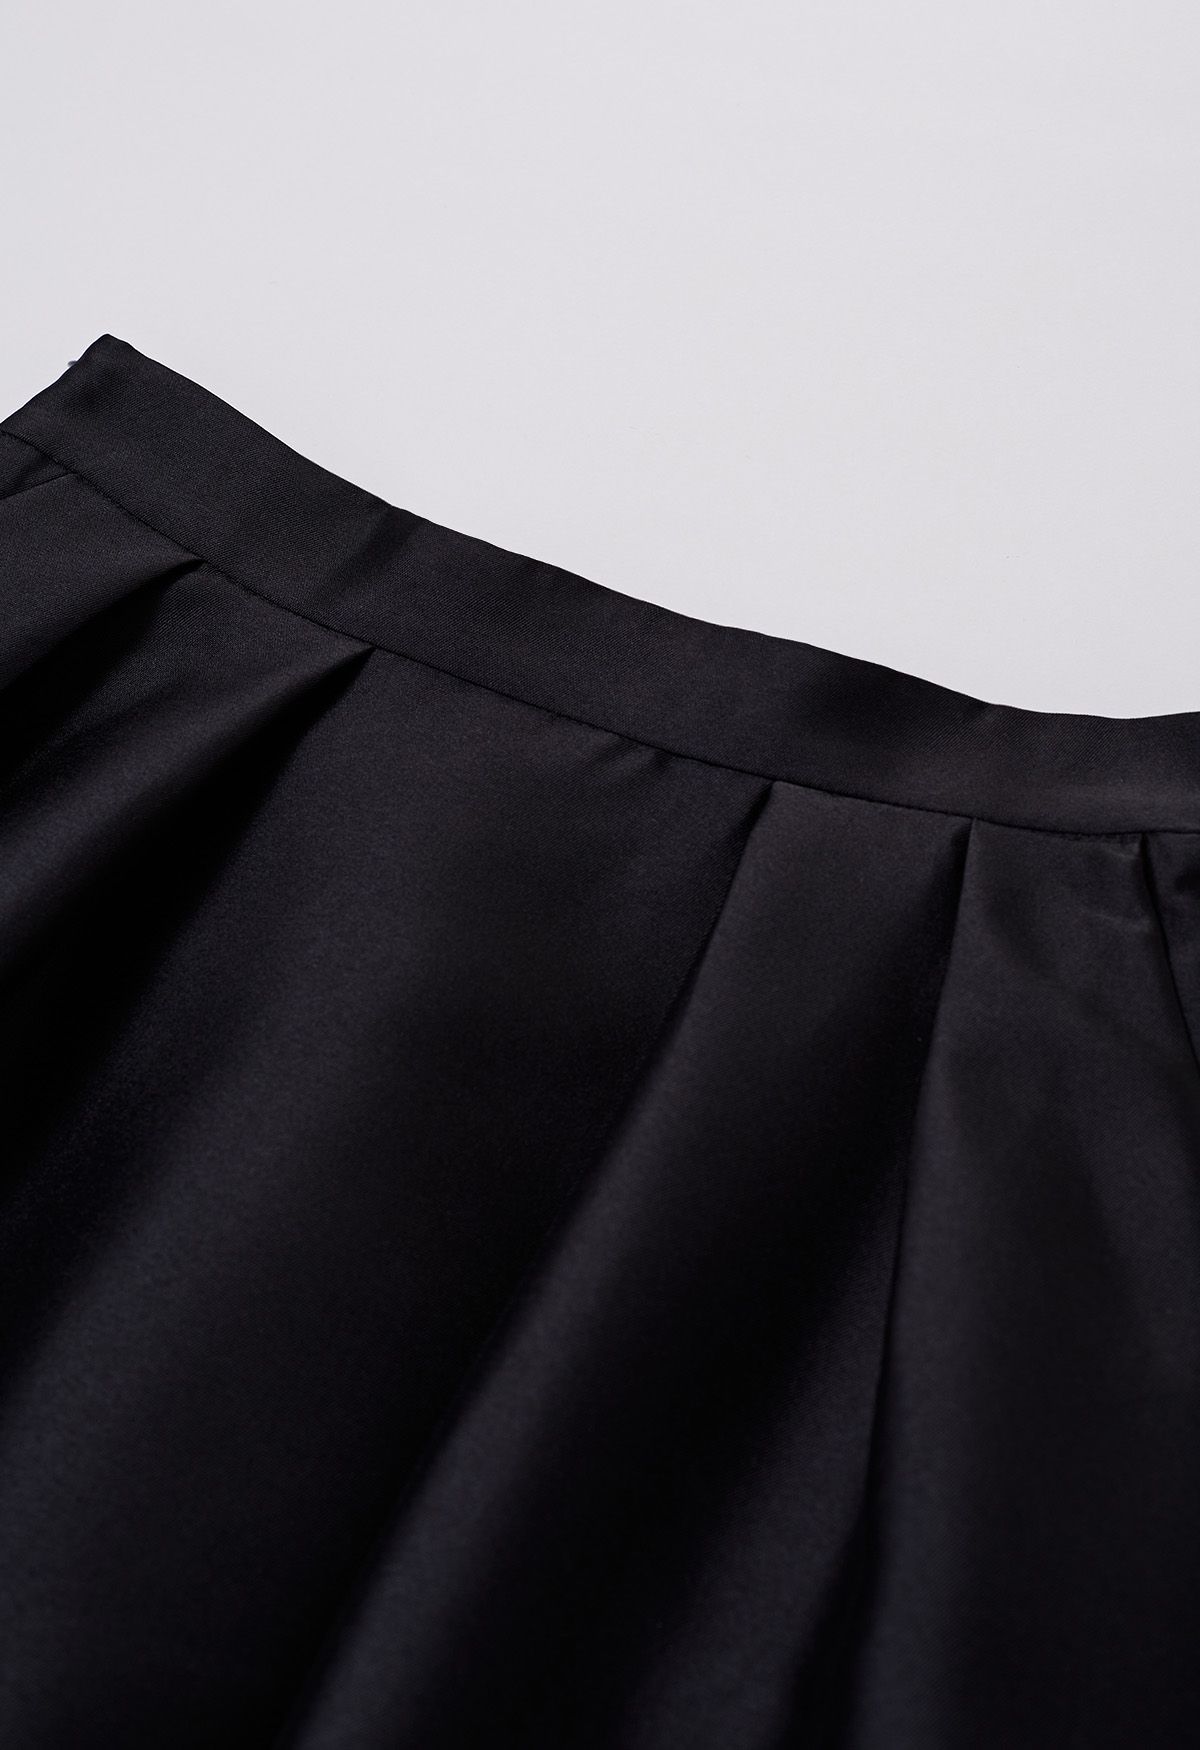 Sleek Side Pockets Pleated A-Line Midi Skirt in Black - Retro, Indie ...